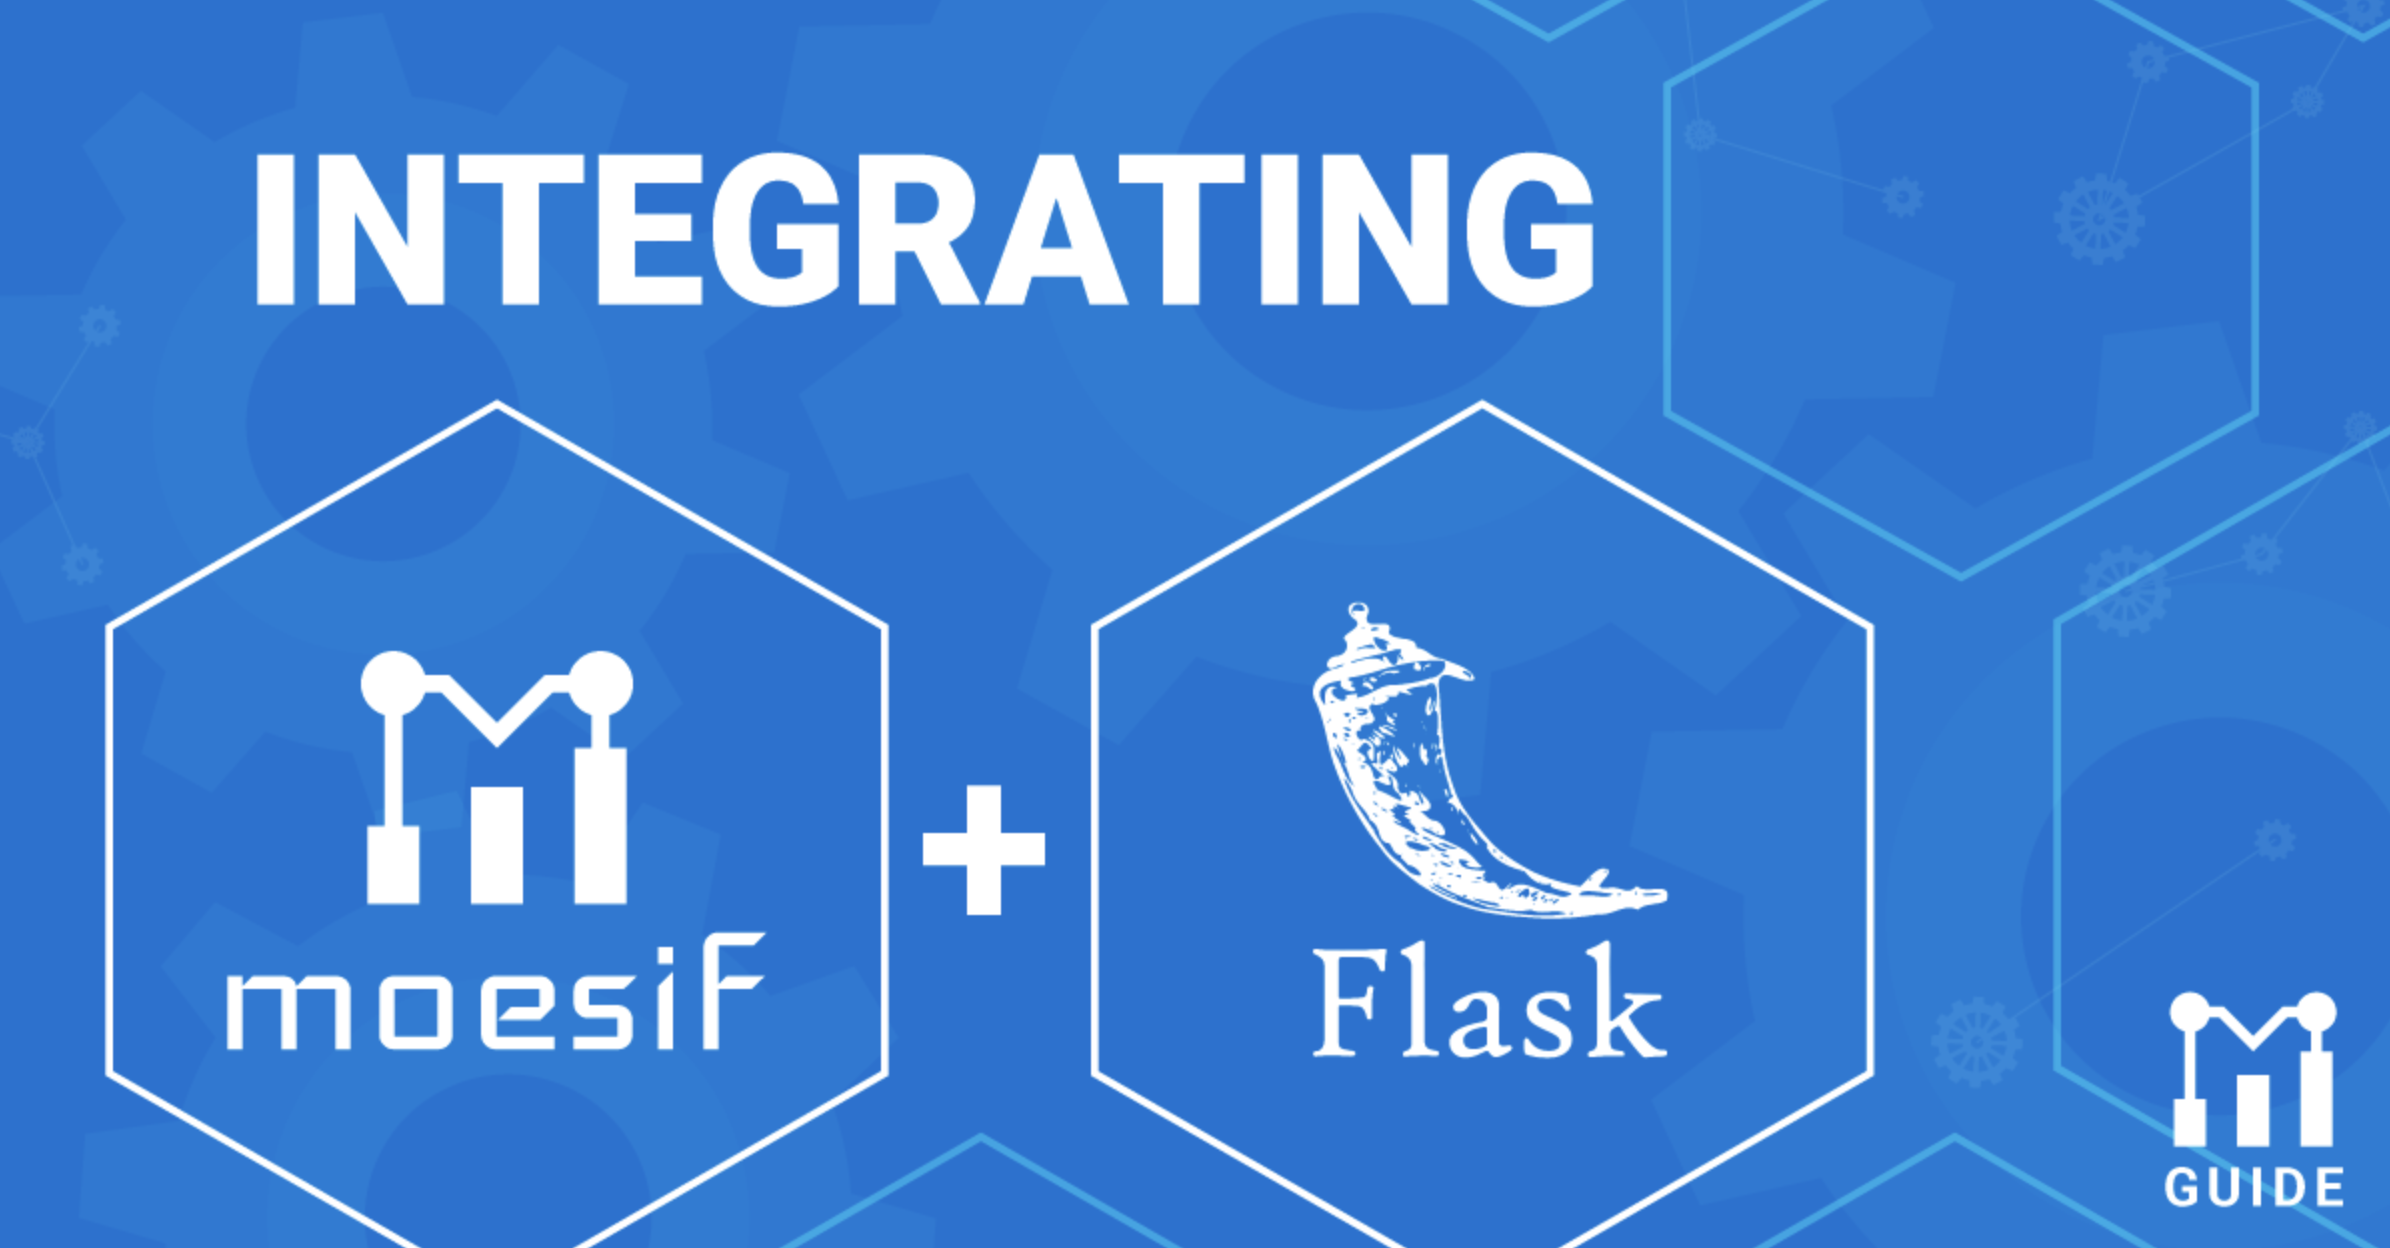 Integrating with Flask (Python)
